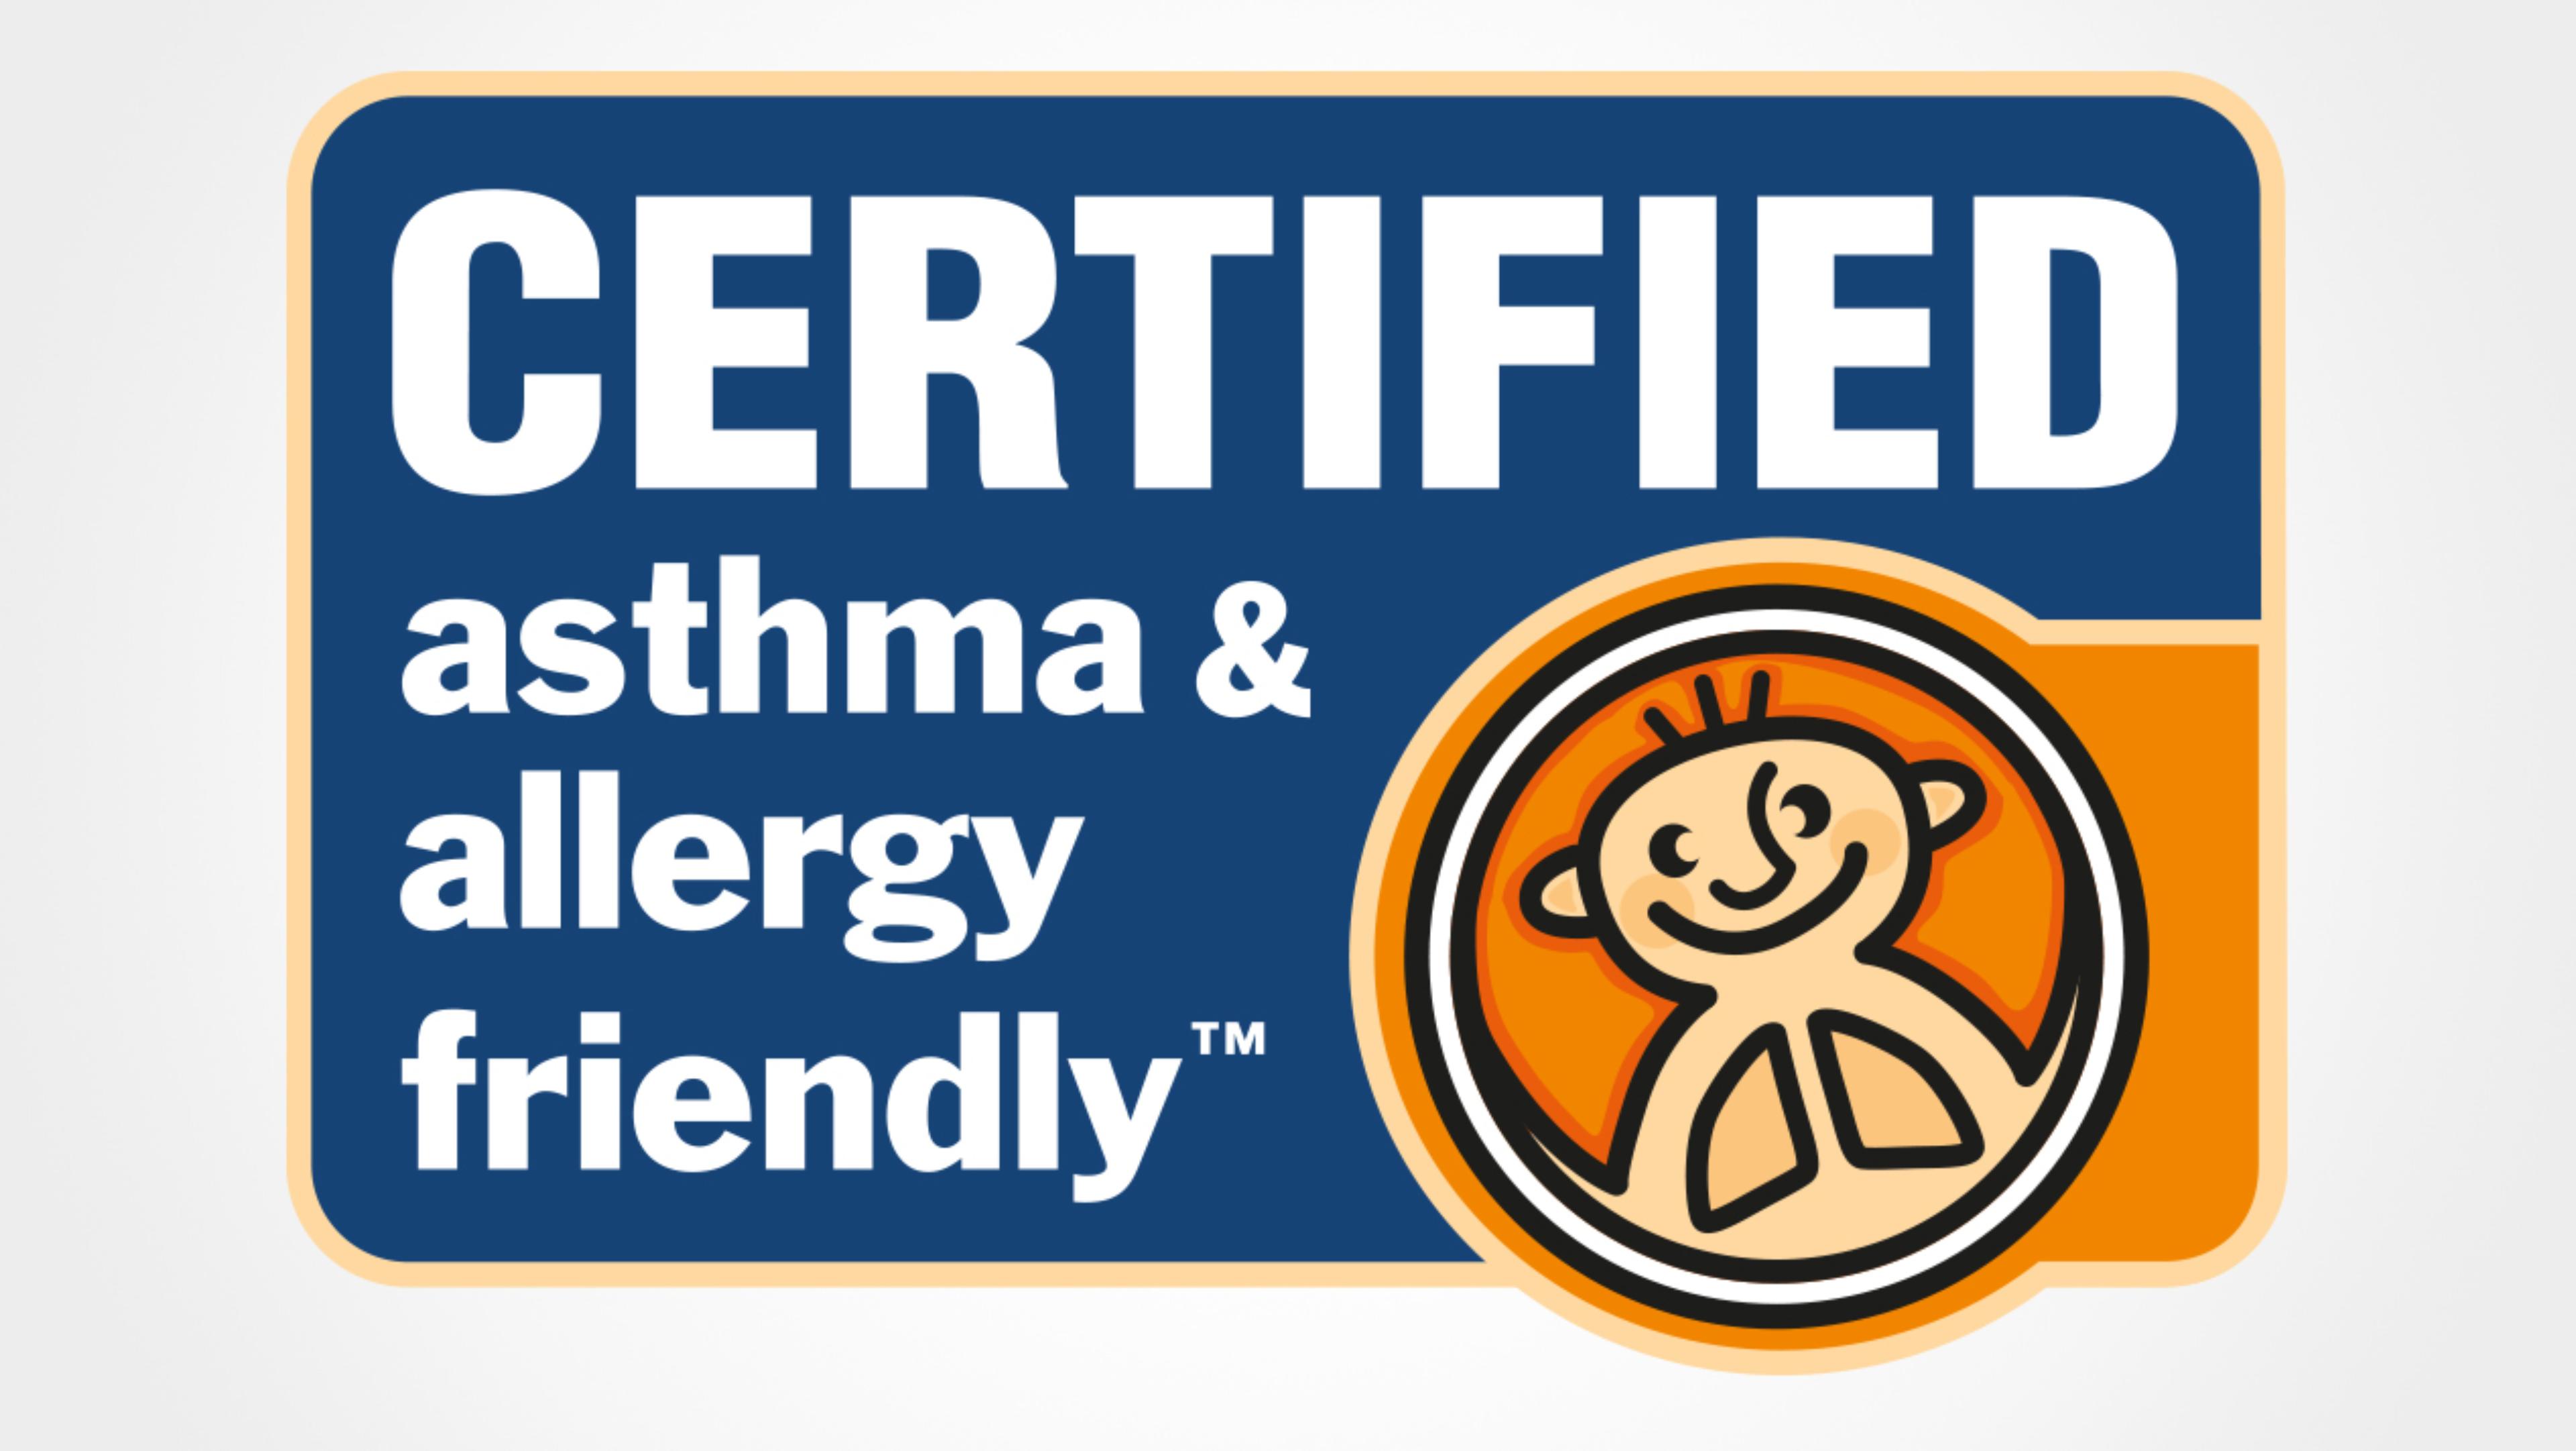 Asthma & allergy friendly Certification Mark